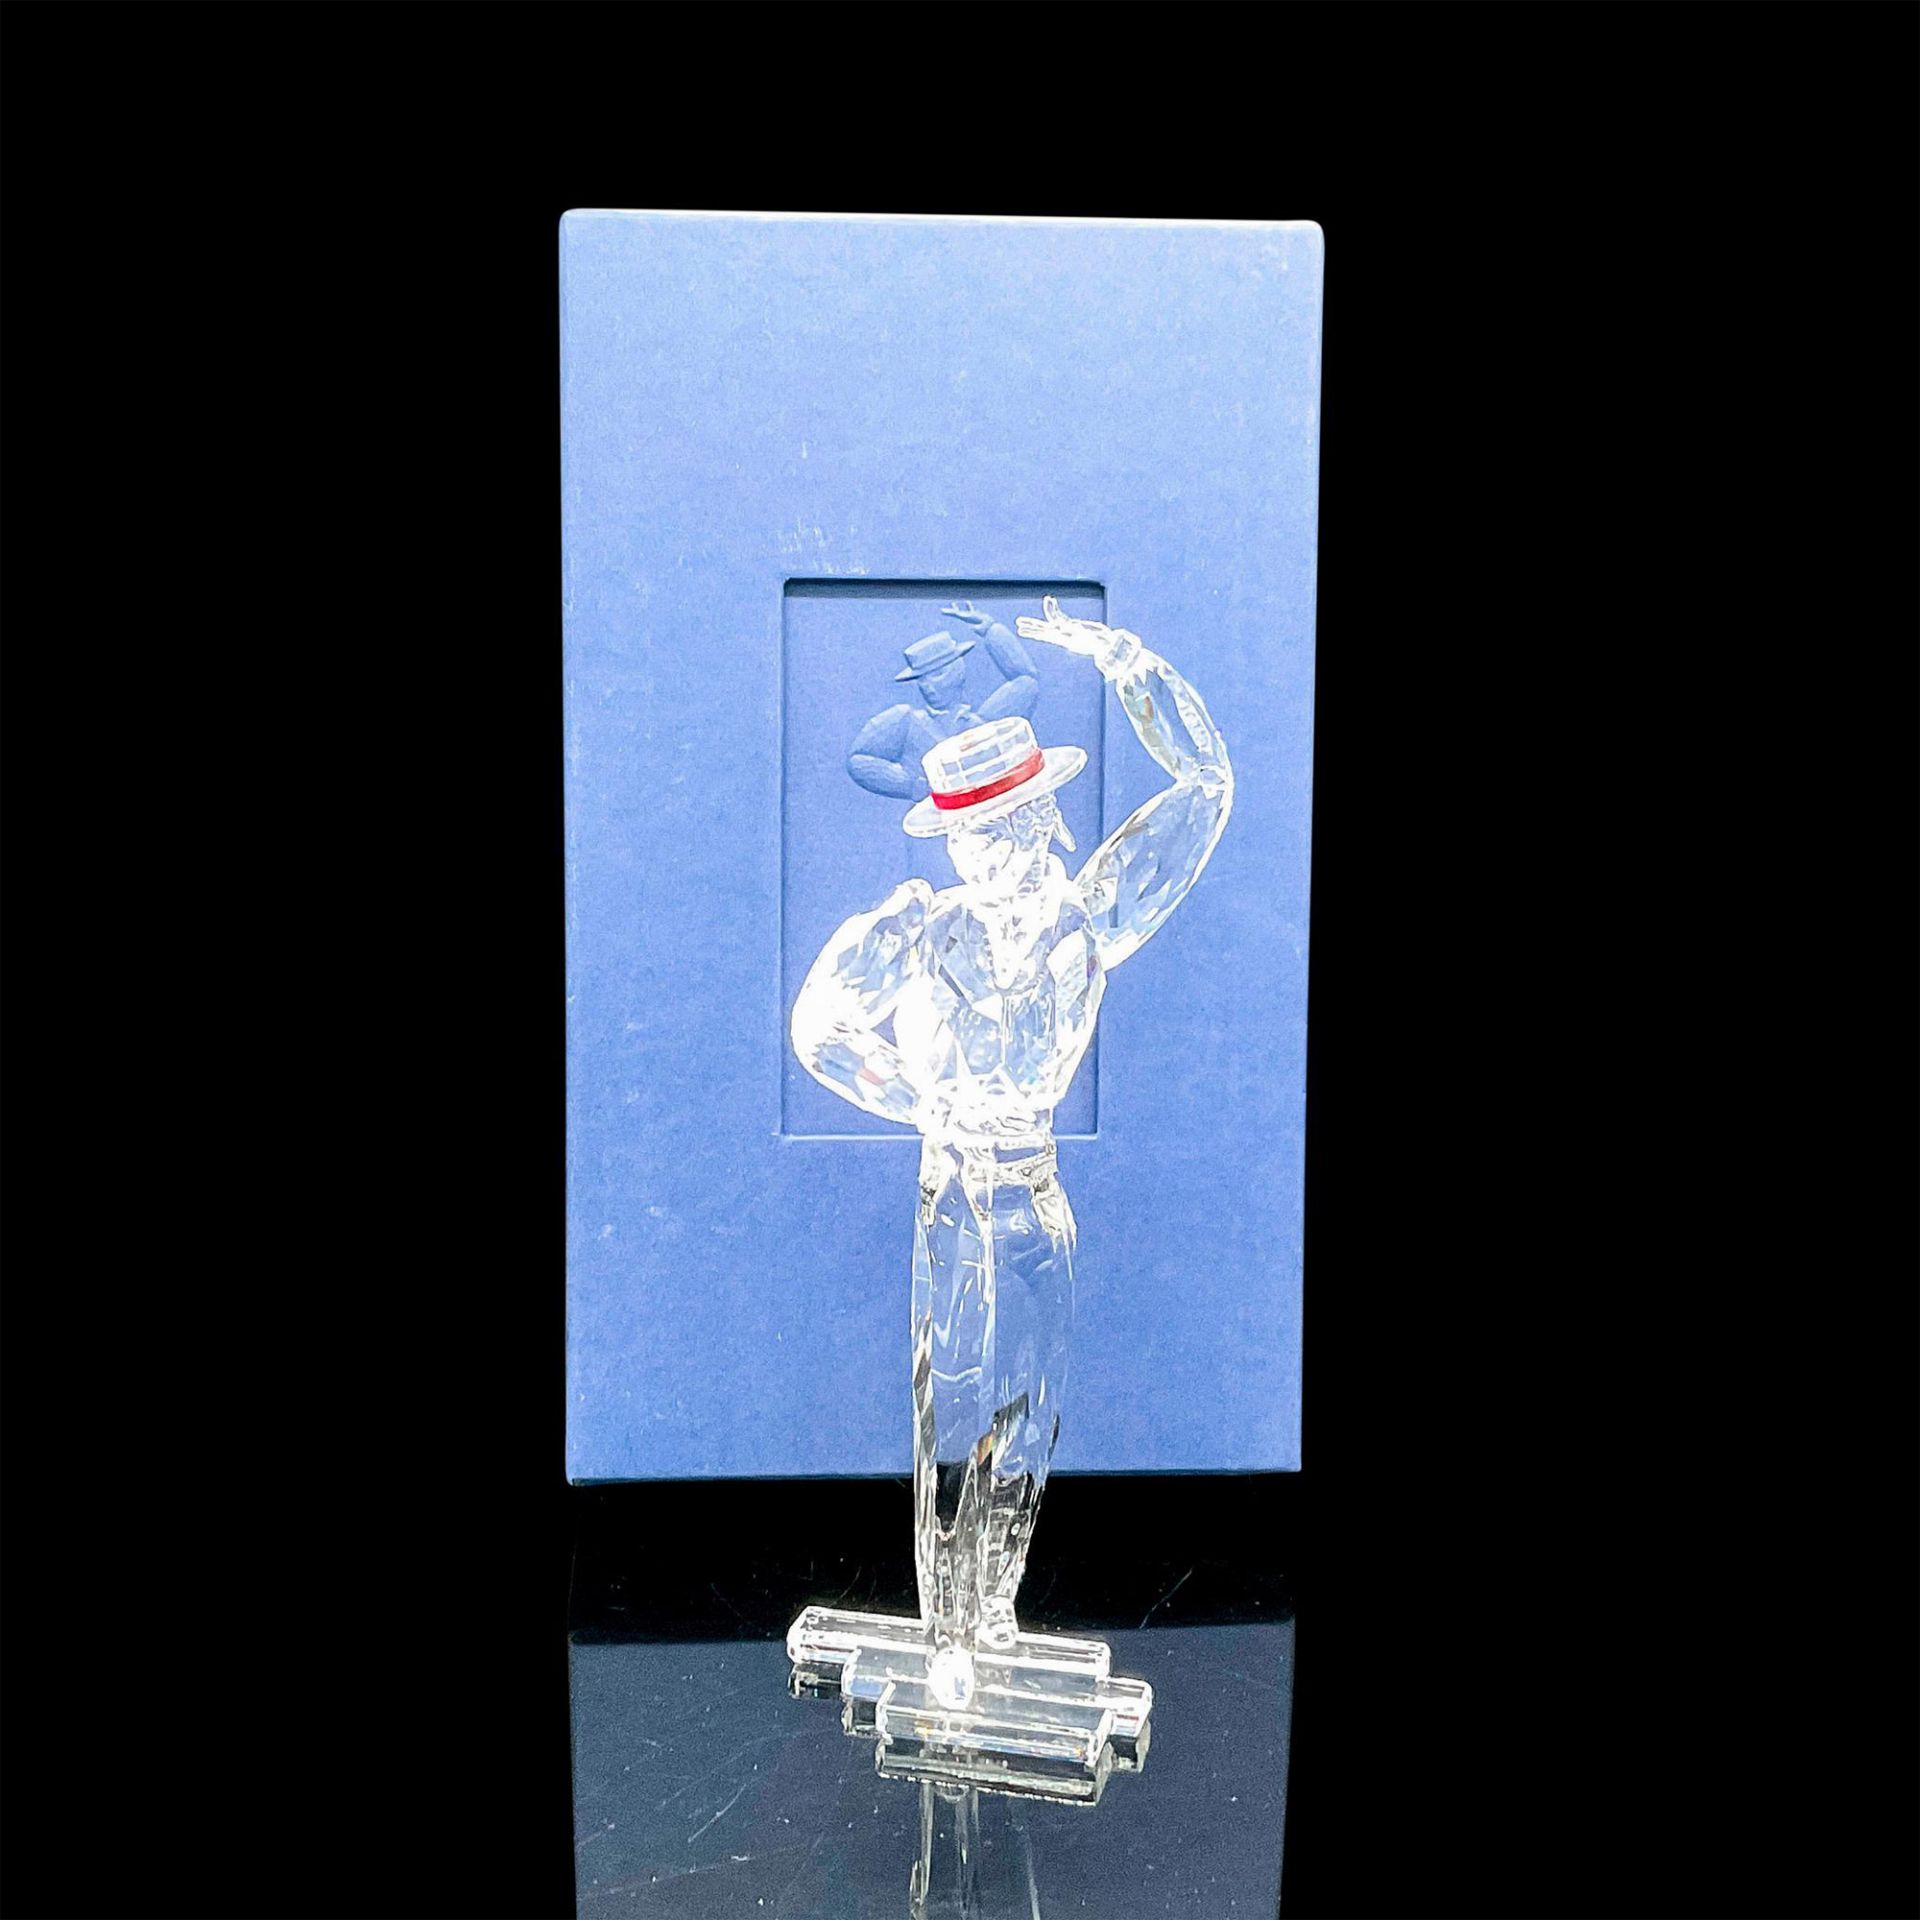 Swarovski Crystal Figurine, Antonio - Image 4 of 4